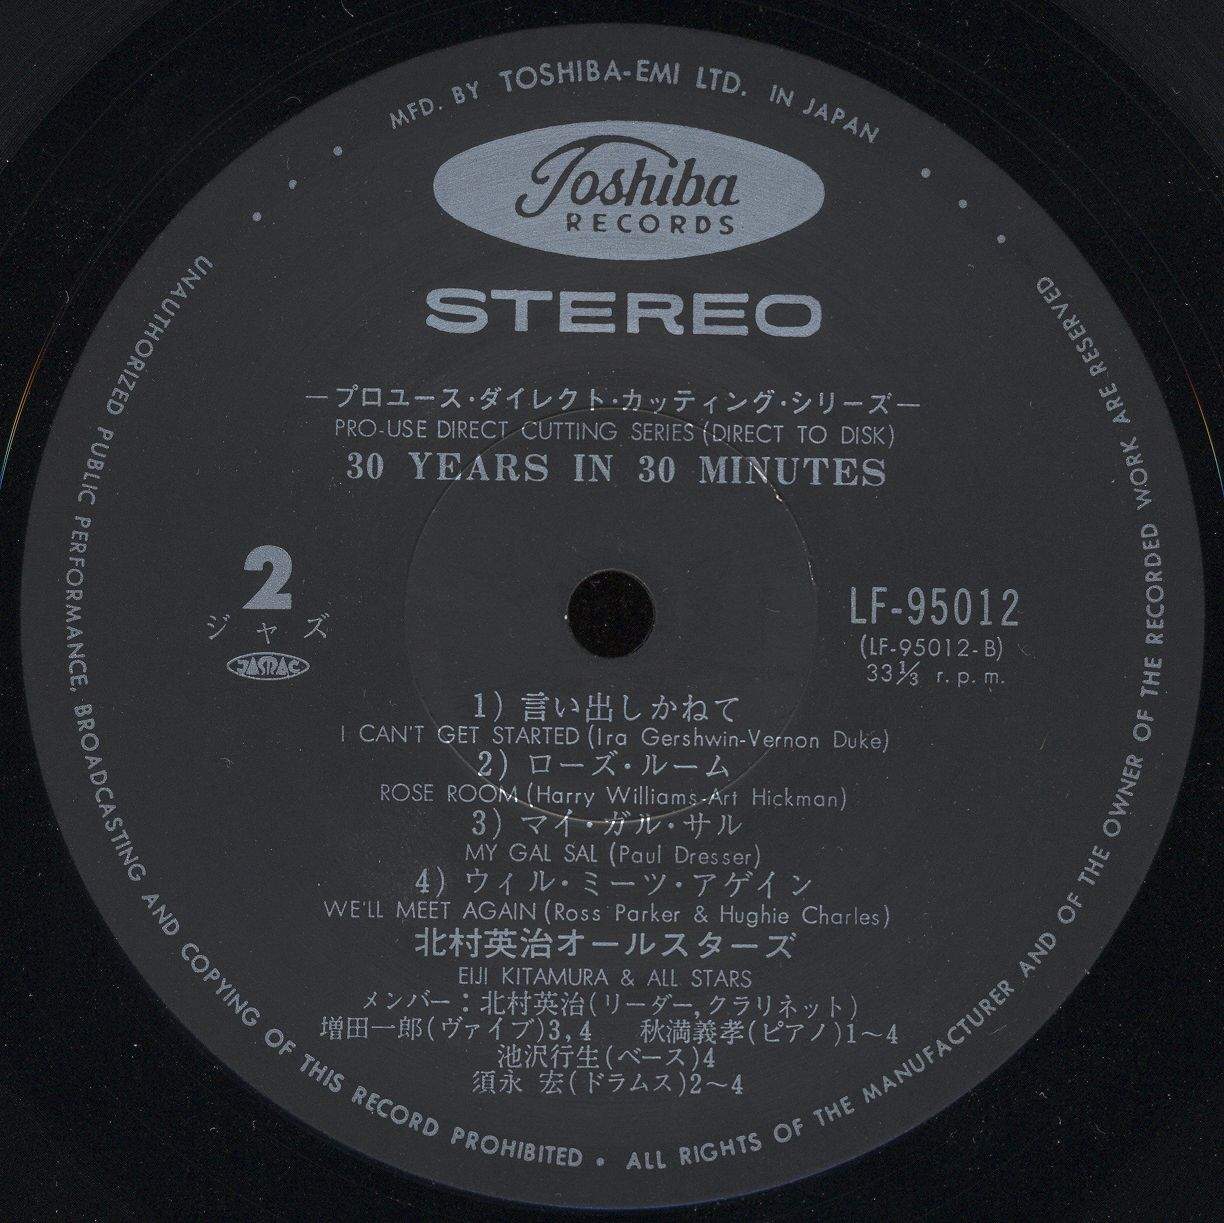 Eiji Kitamura & All Stars 1977 30 Years In 30 Minutes LP side 2.jpg